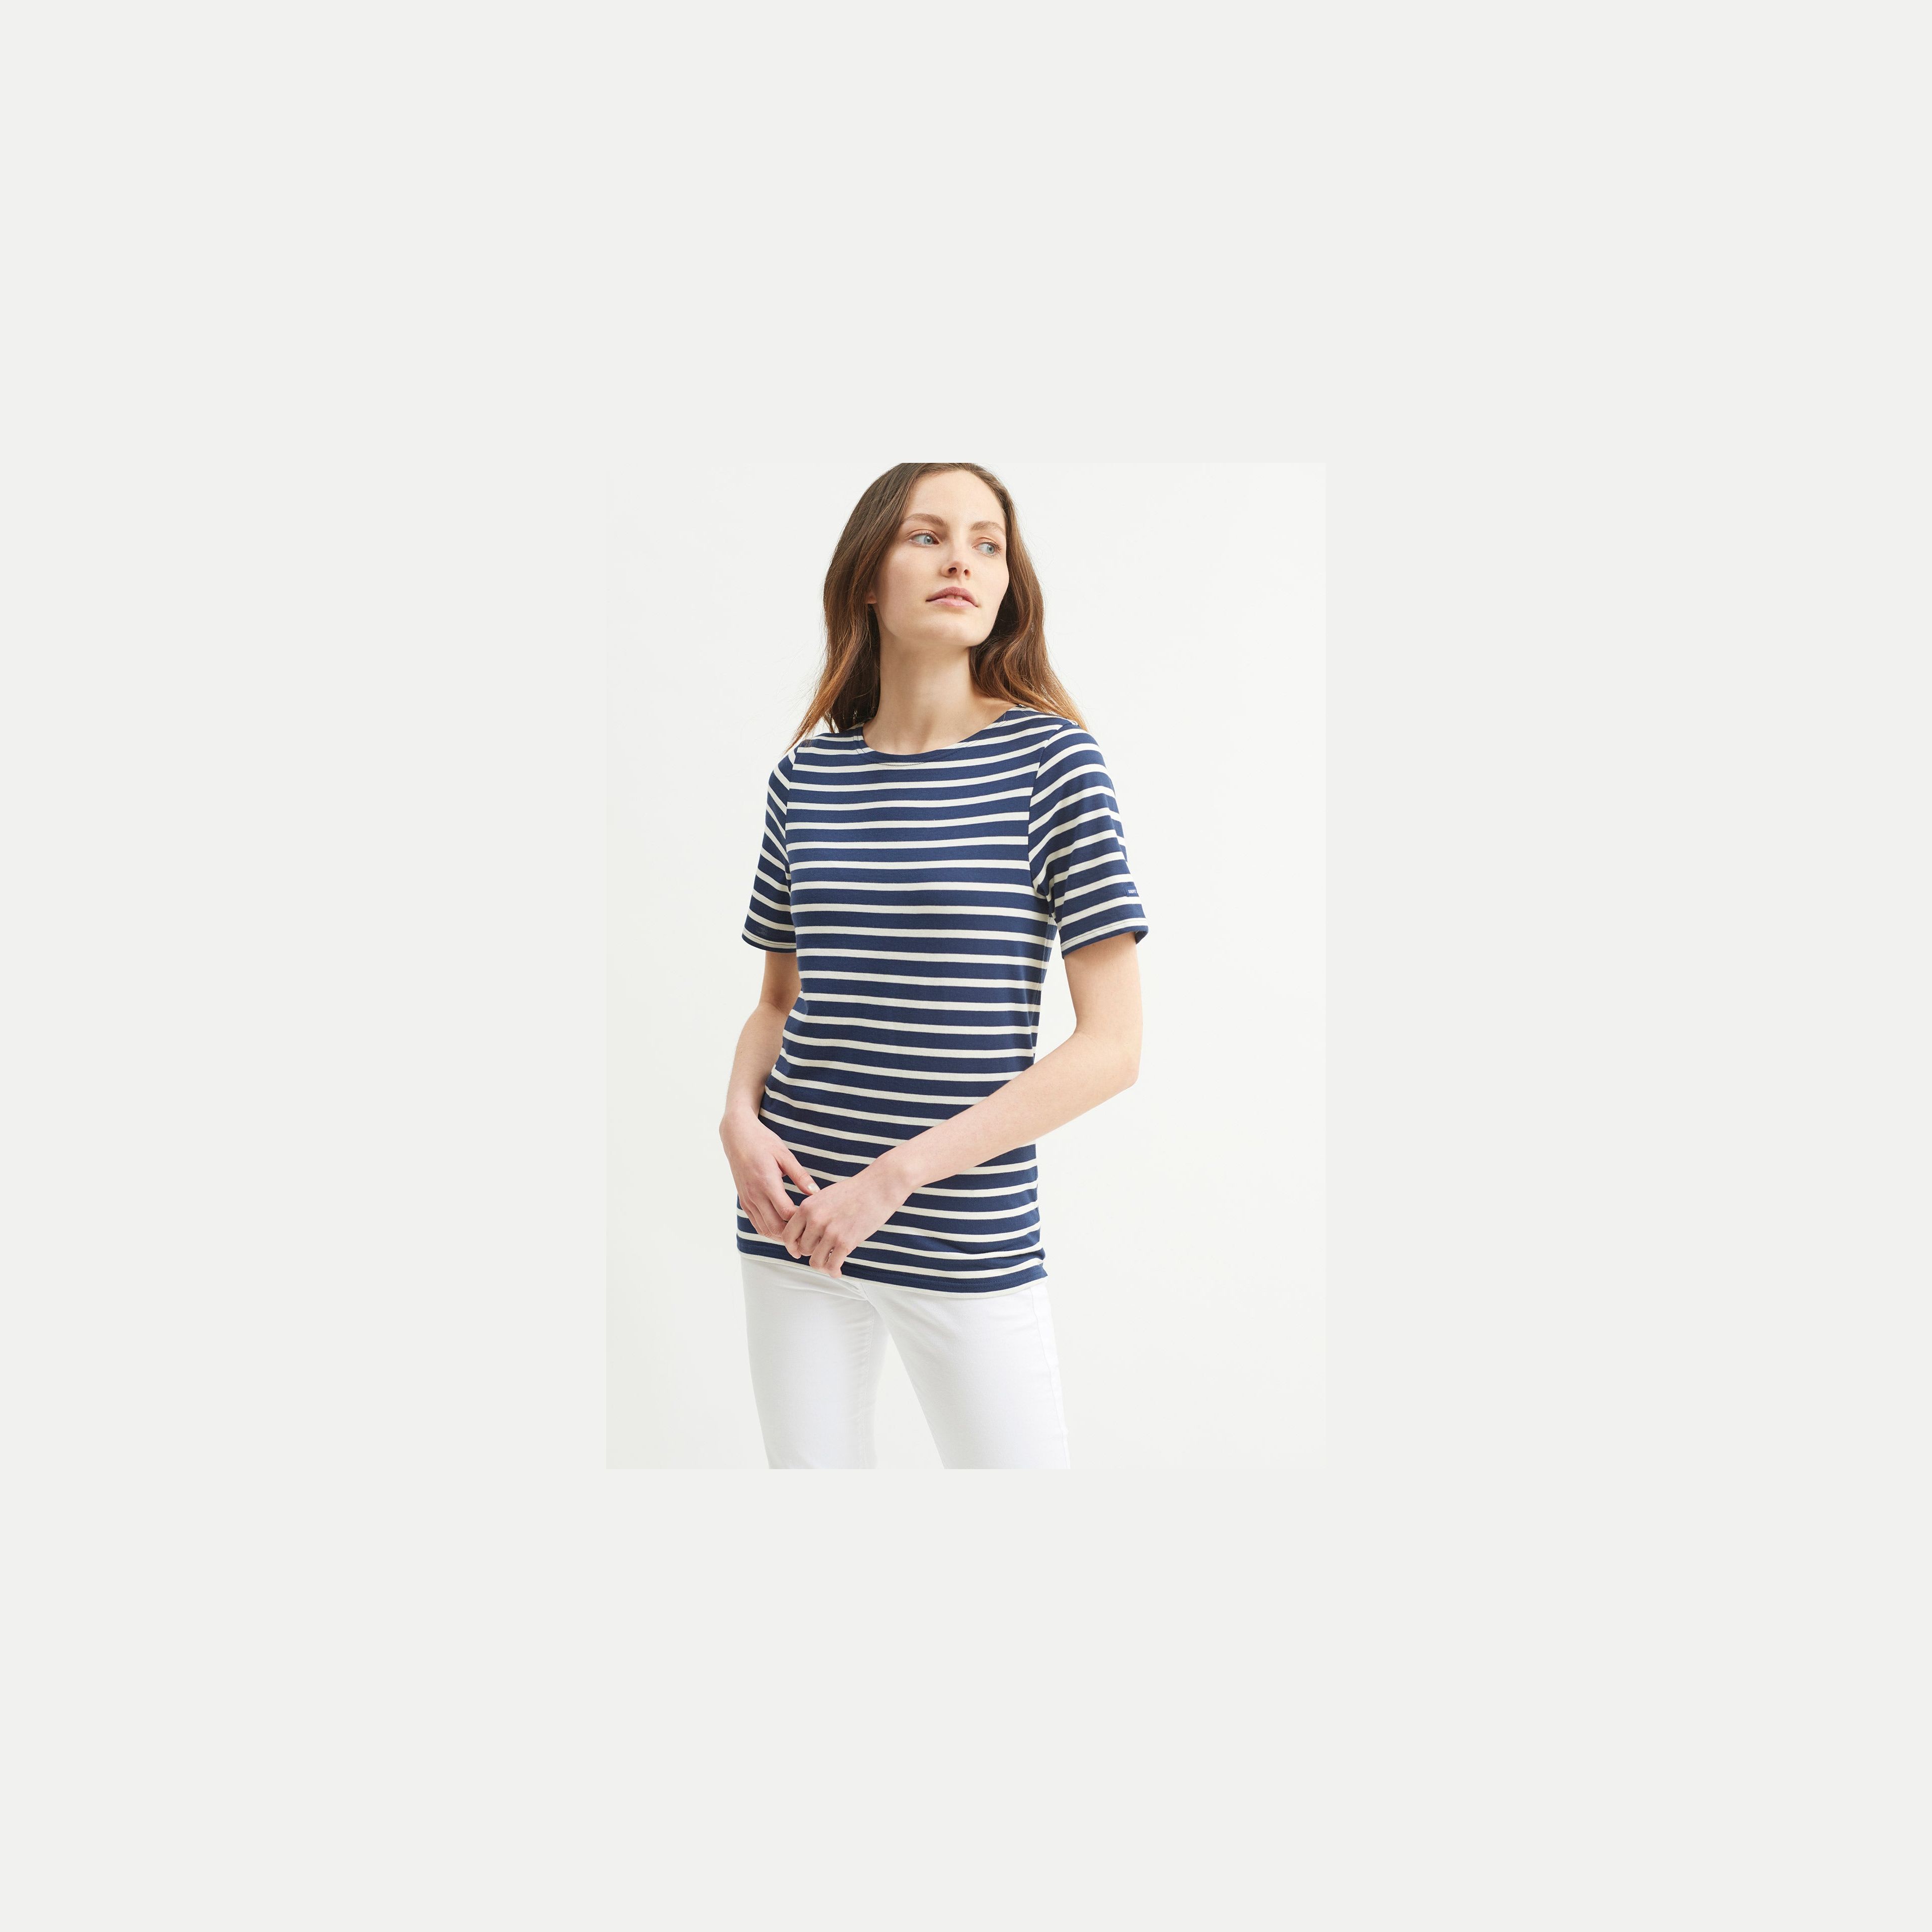 LEVANT MODERN - Breton Stripe Short Sleeve Shirt | Soft Cotton | Unisex Fit (NAVY / ECRU)